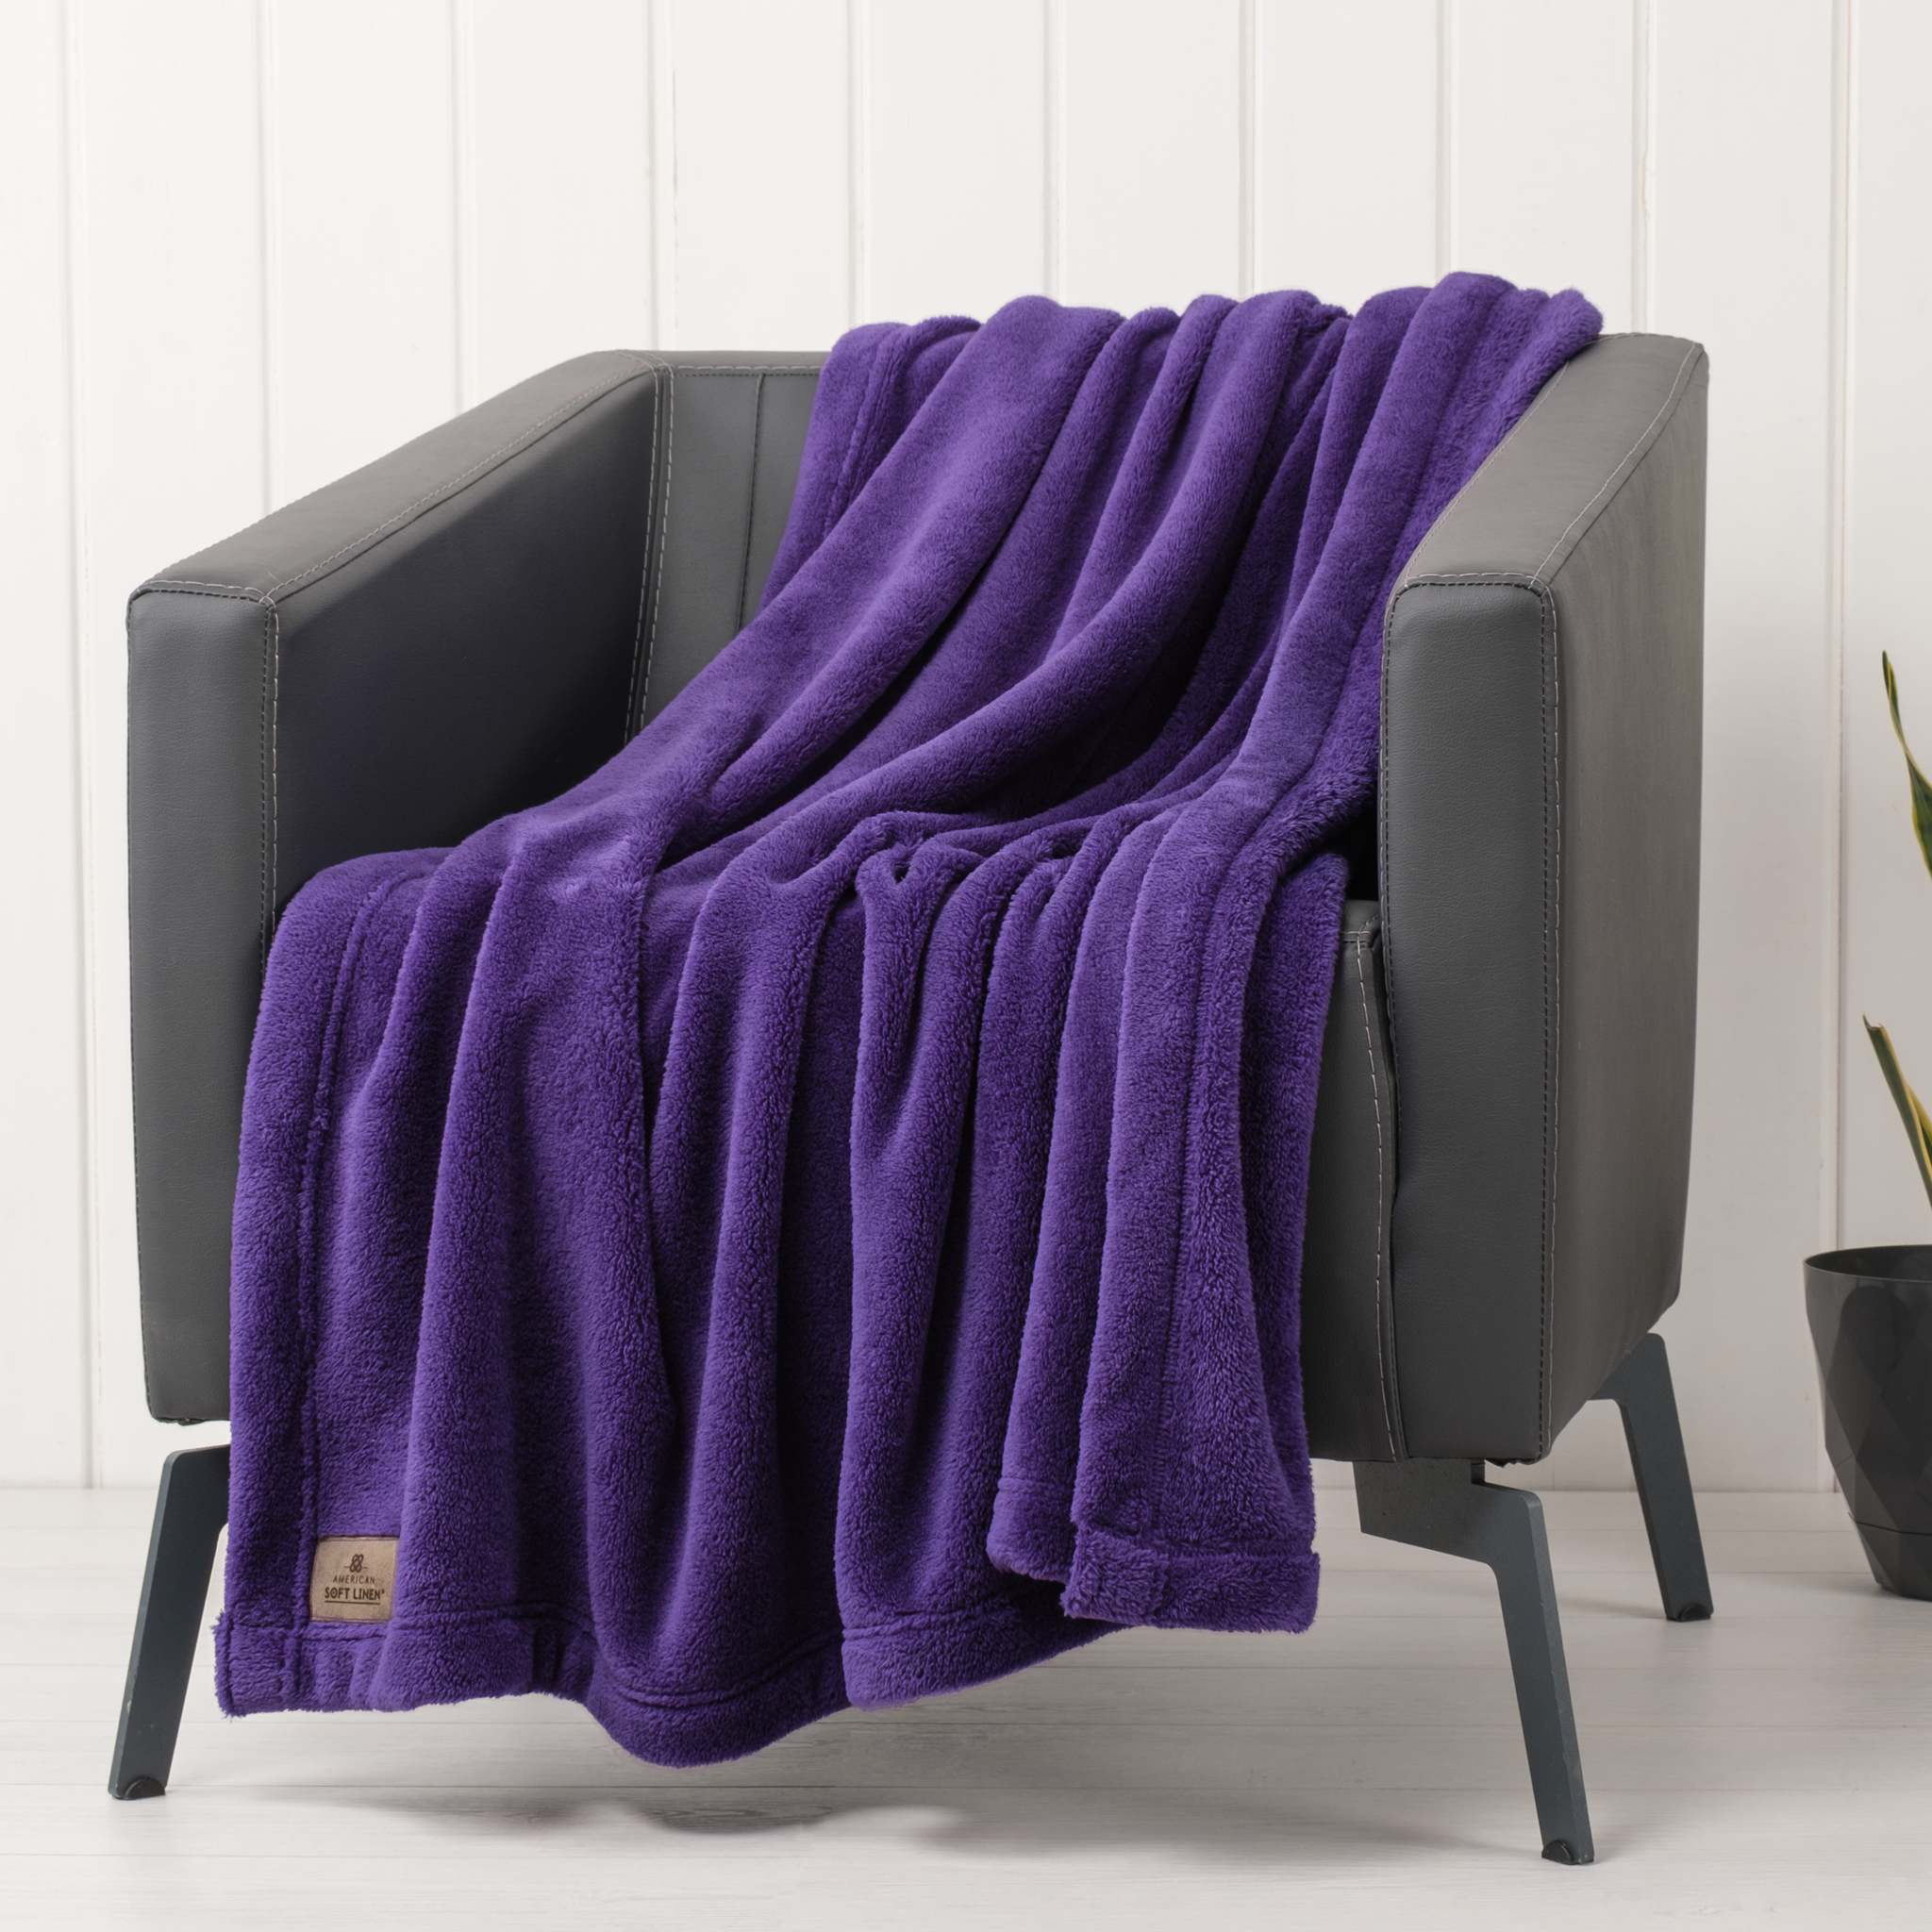 American Soft Linen - Bedding Fleece Blanket - Wholesale - 24 Set Case Pack - Throw Size 50x60 inches - Purple - 1